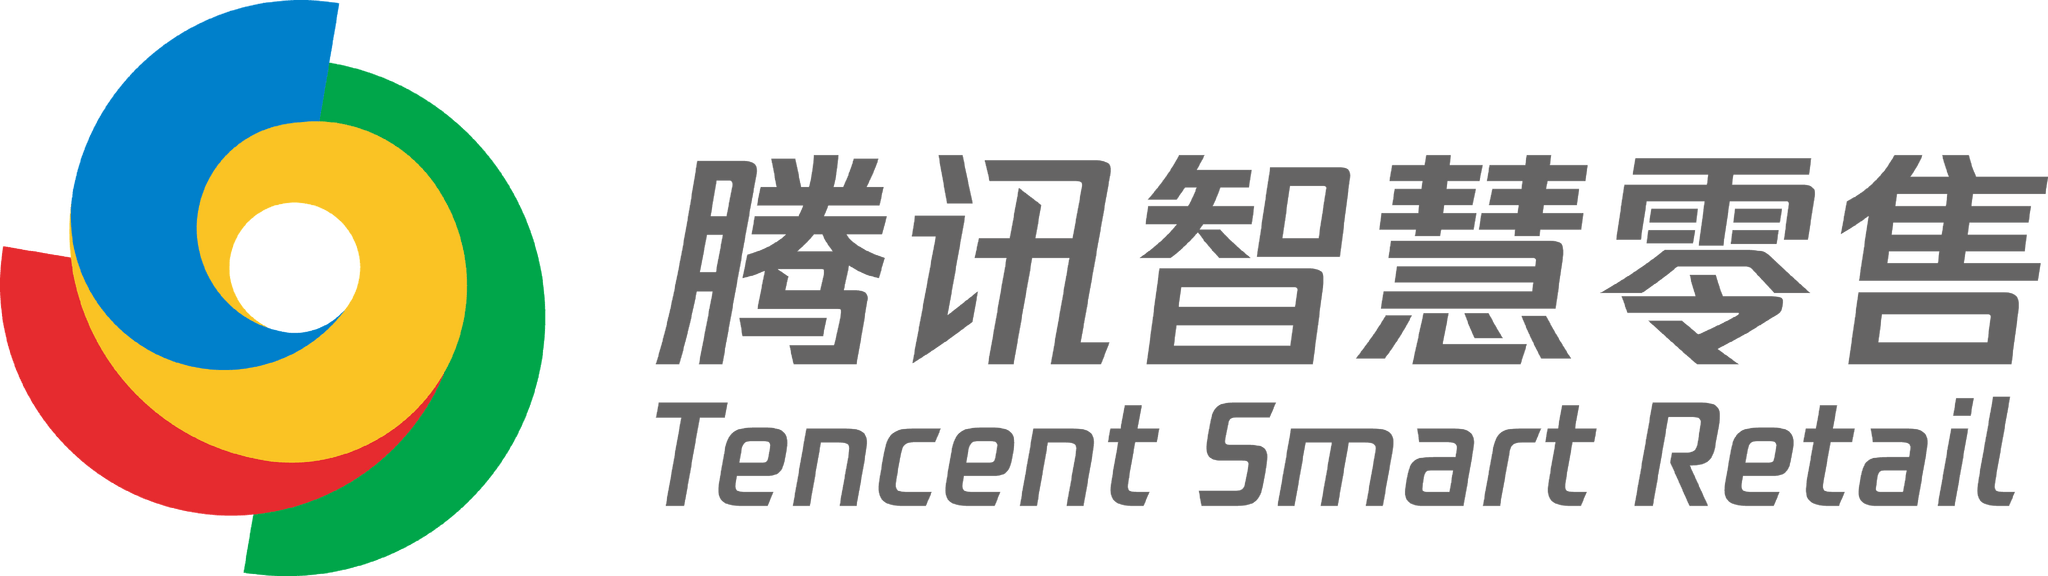 Tencent Smart Retail